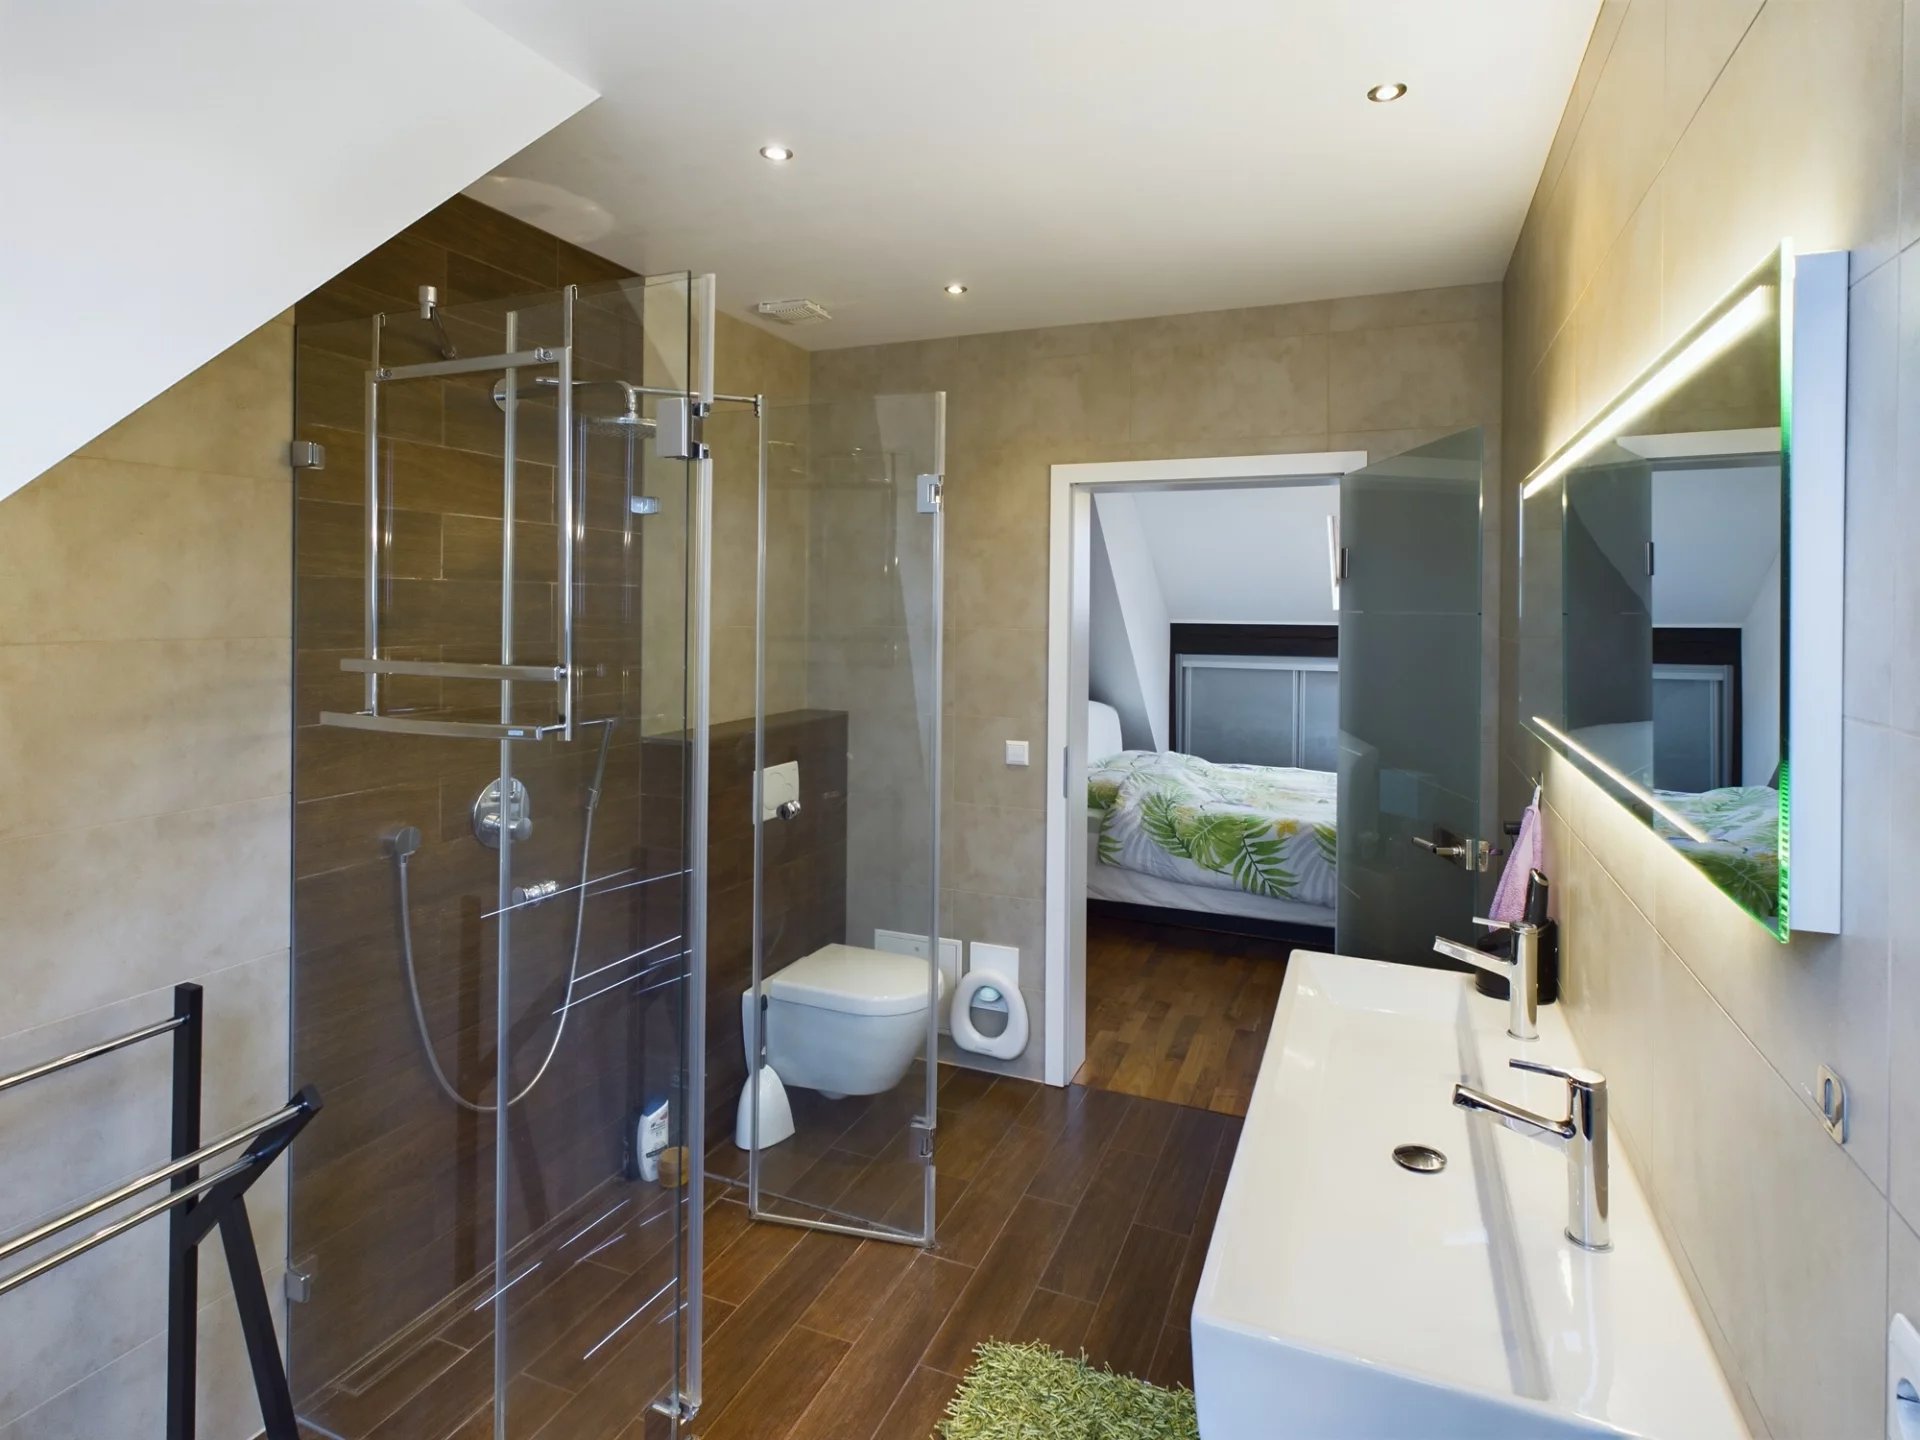 3-bedroom dupelx apartement for sale in Bergem